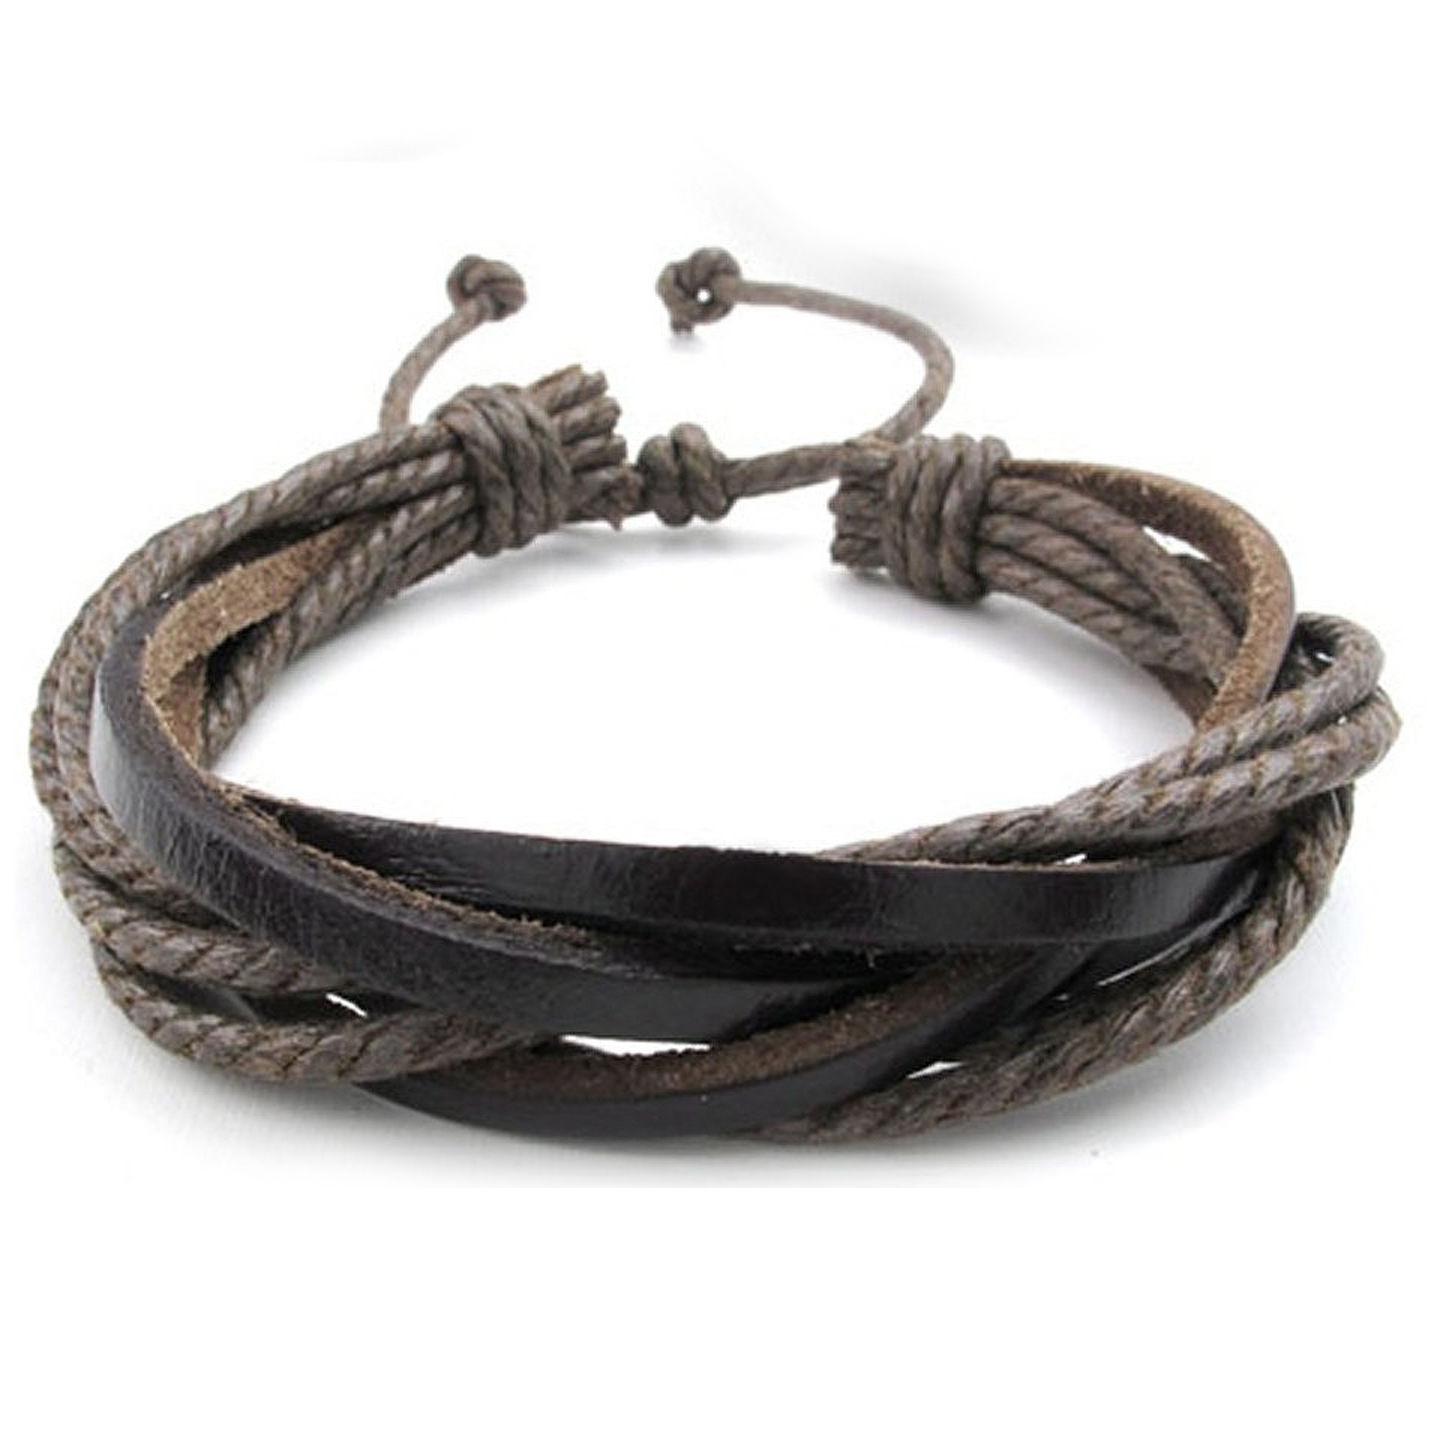 Handmade Men's Leather Bracelet Woven Hemp Rope Wrapped Brown ...